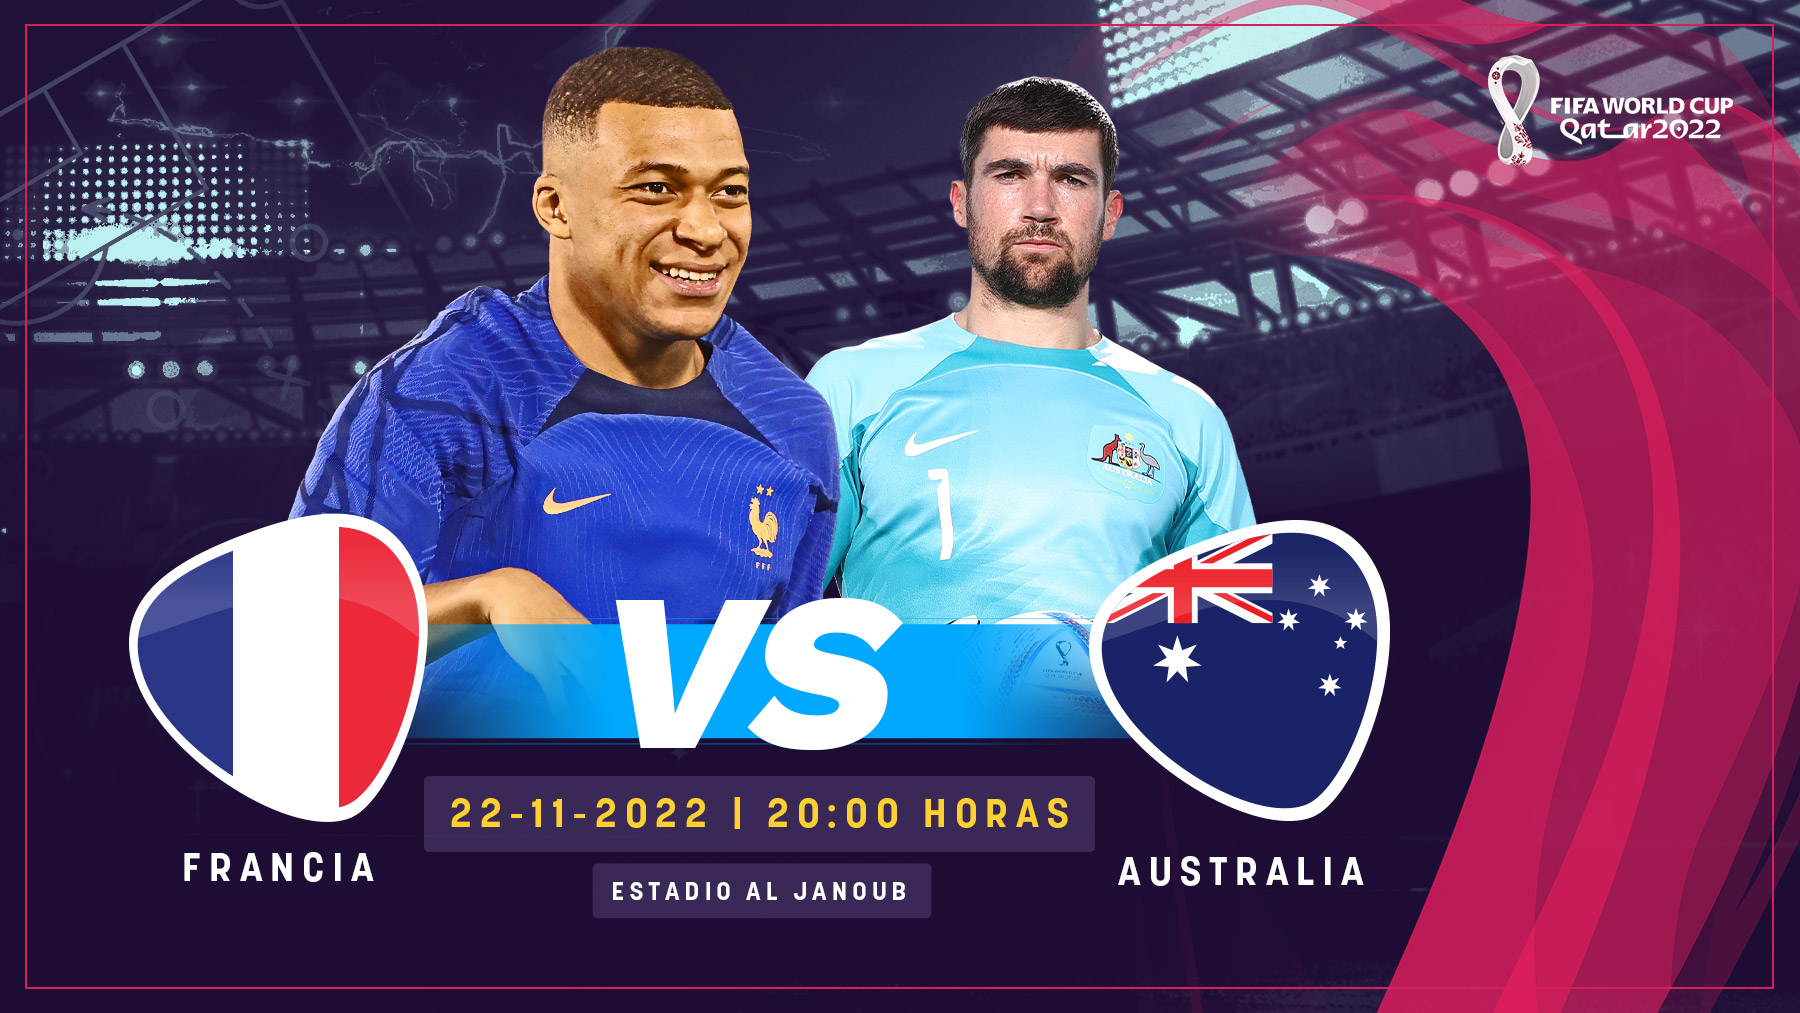 Francia – Australia: Turno para Mbappé | Mundial Qatar 2022